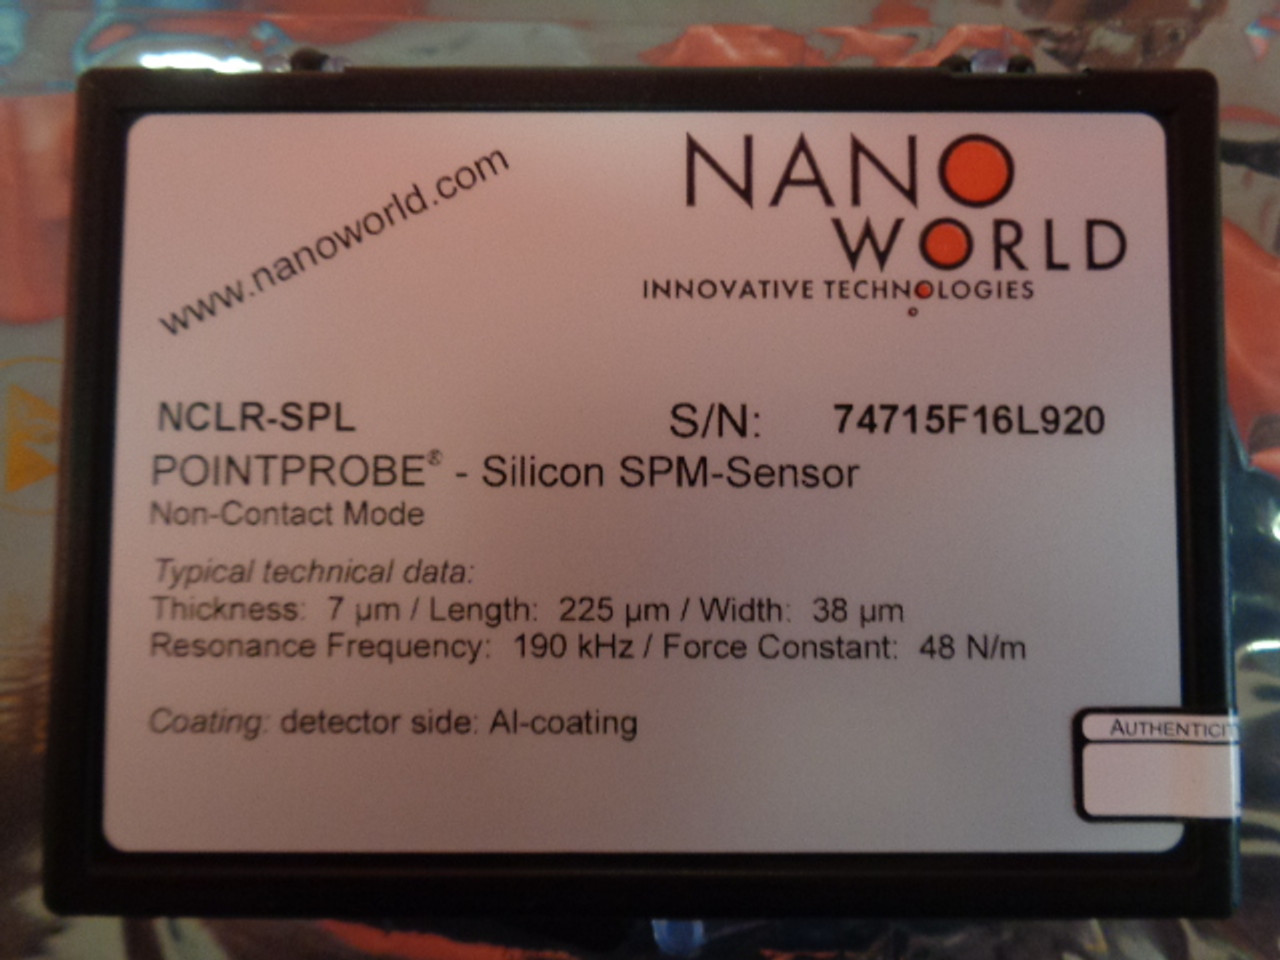 NanoWorld Type NCLR-SPL PointProbe - Silicon SPM-Sensor